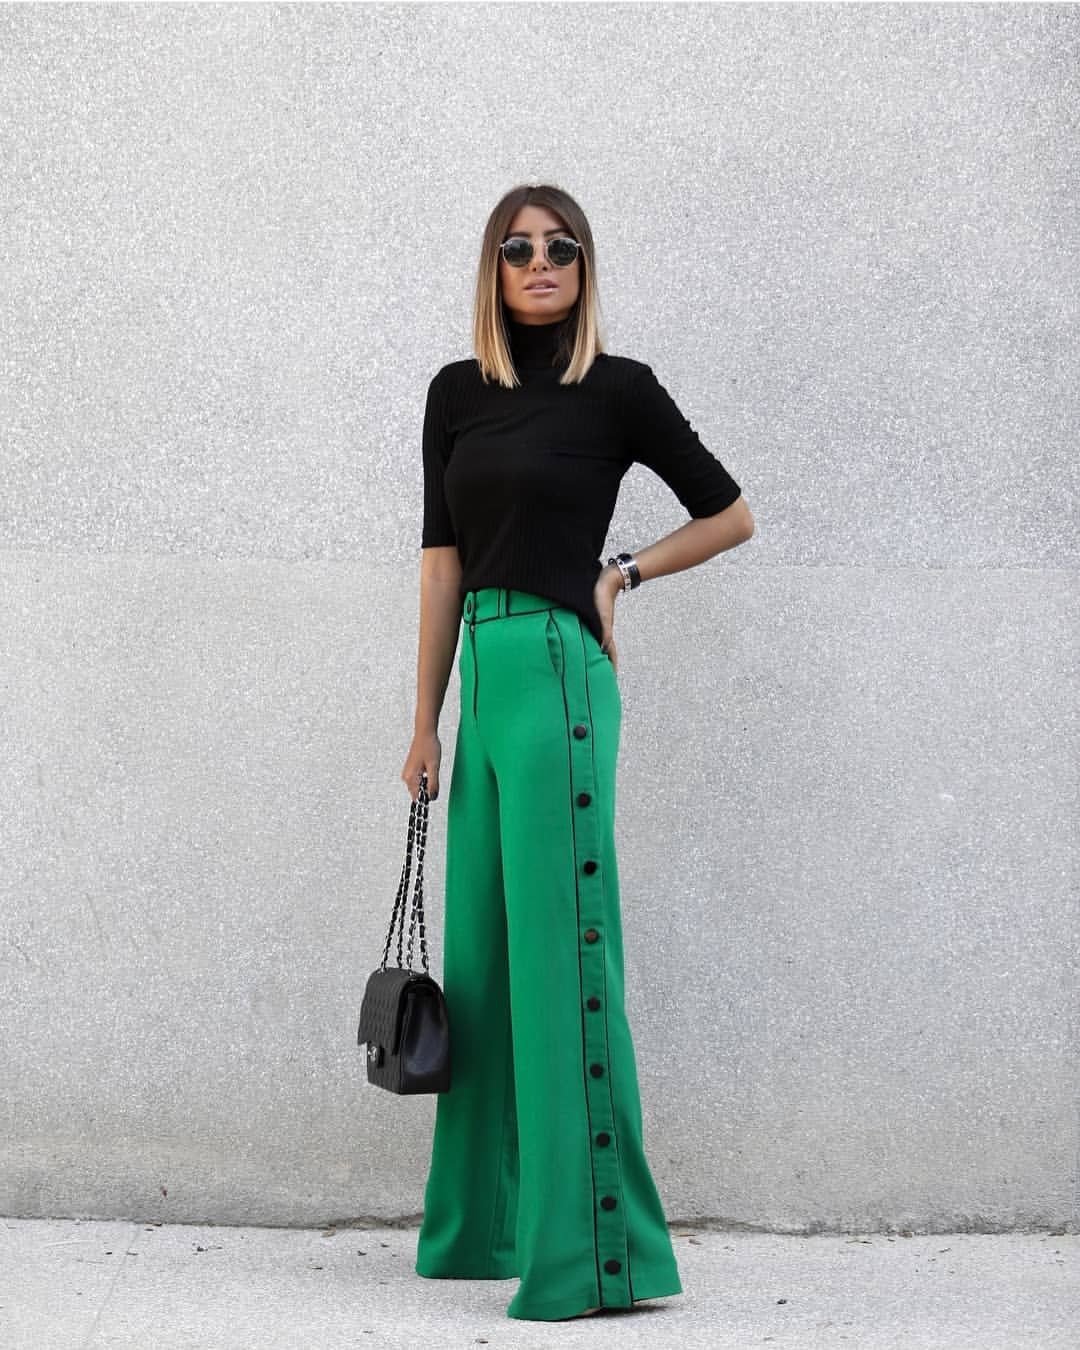 Outfits With Green Pants, Stella & Dot, Johanna Ortiz: Business casual,  Palazzo pants,  Vero Moda,  Casual Outfits,  Green Pant Outfits  